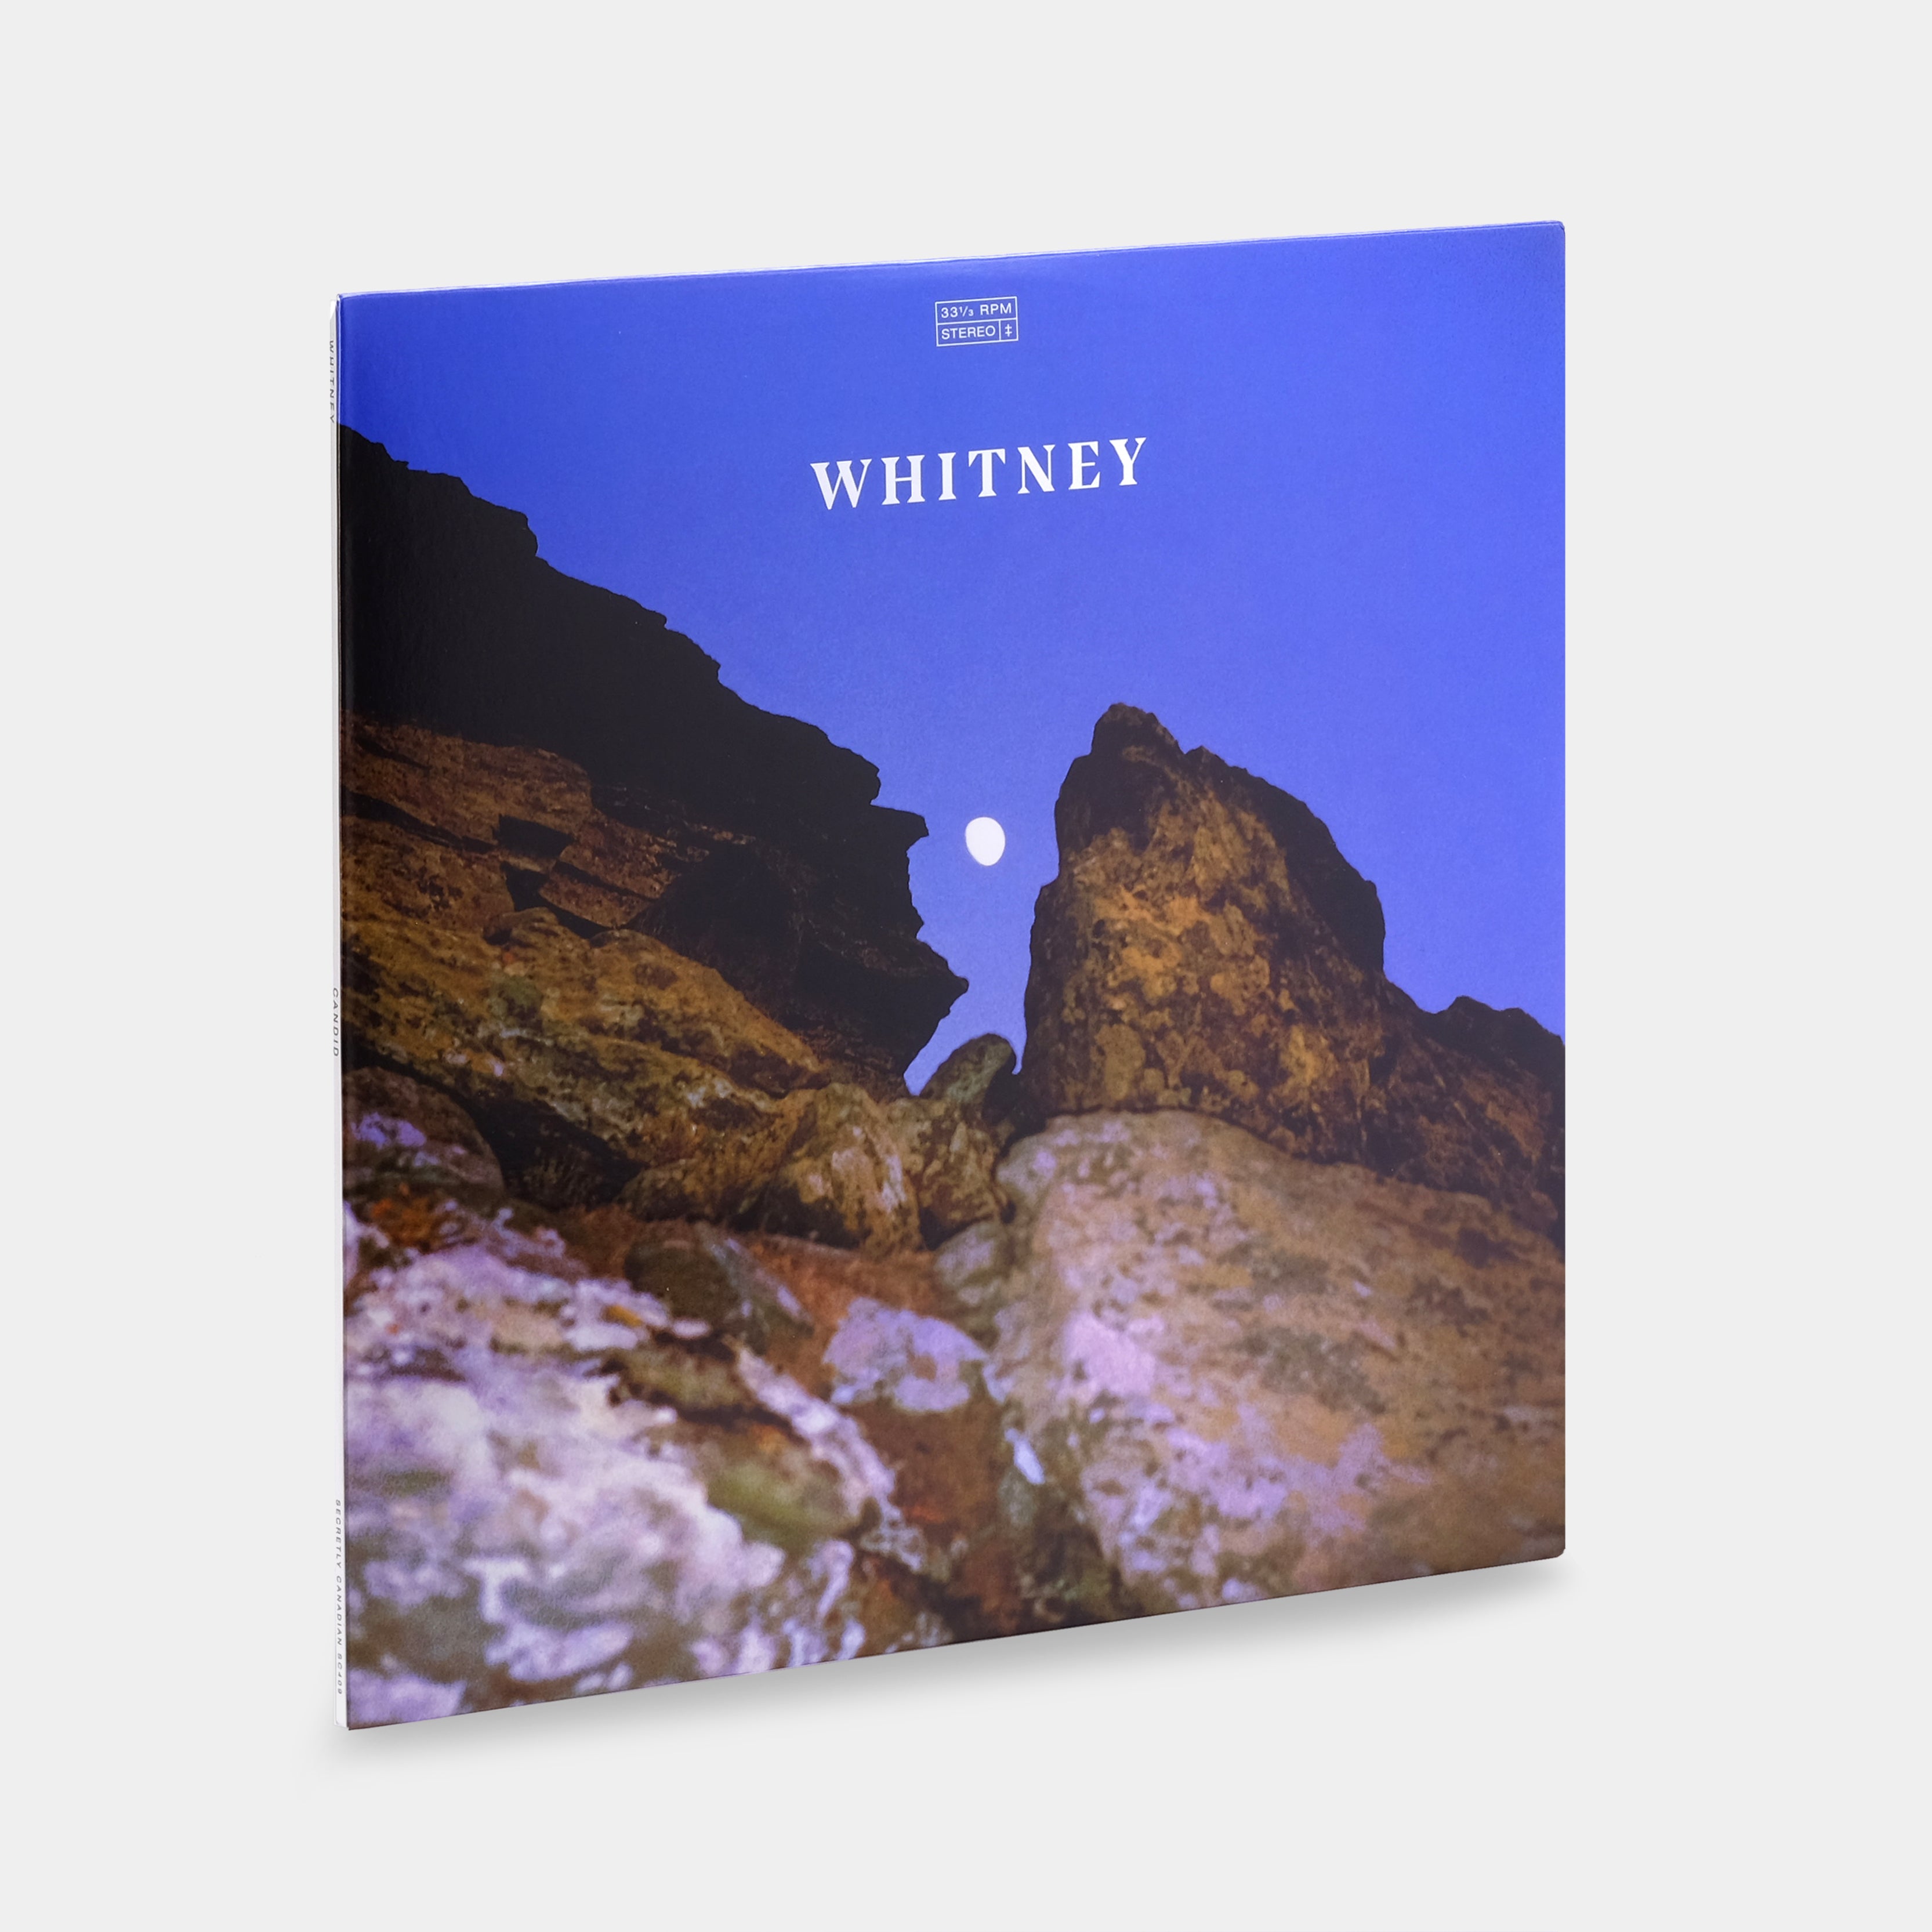 Whitney - Candid LP Vinyl Record